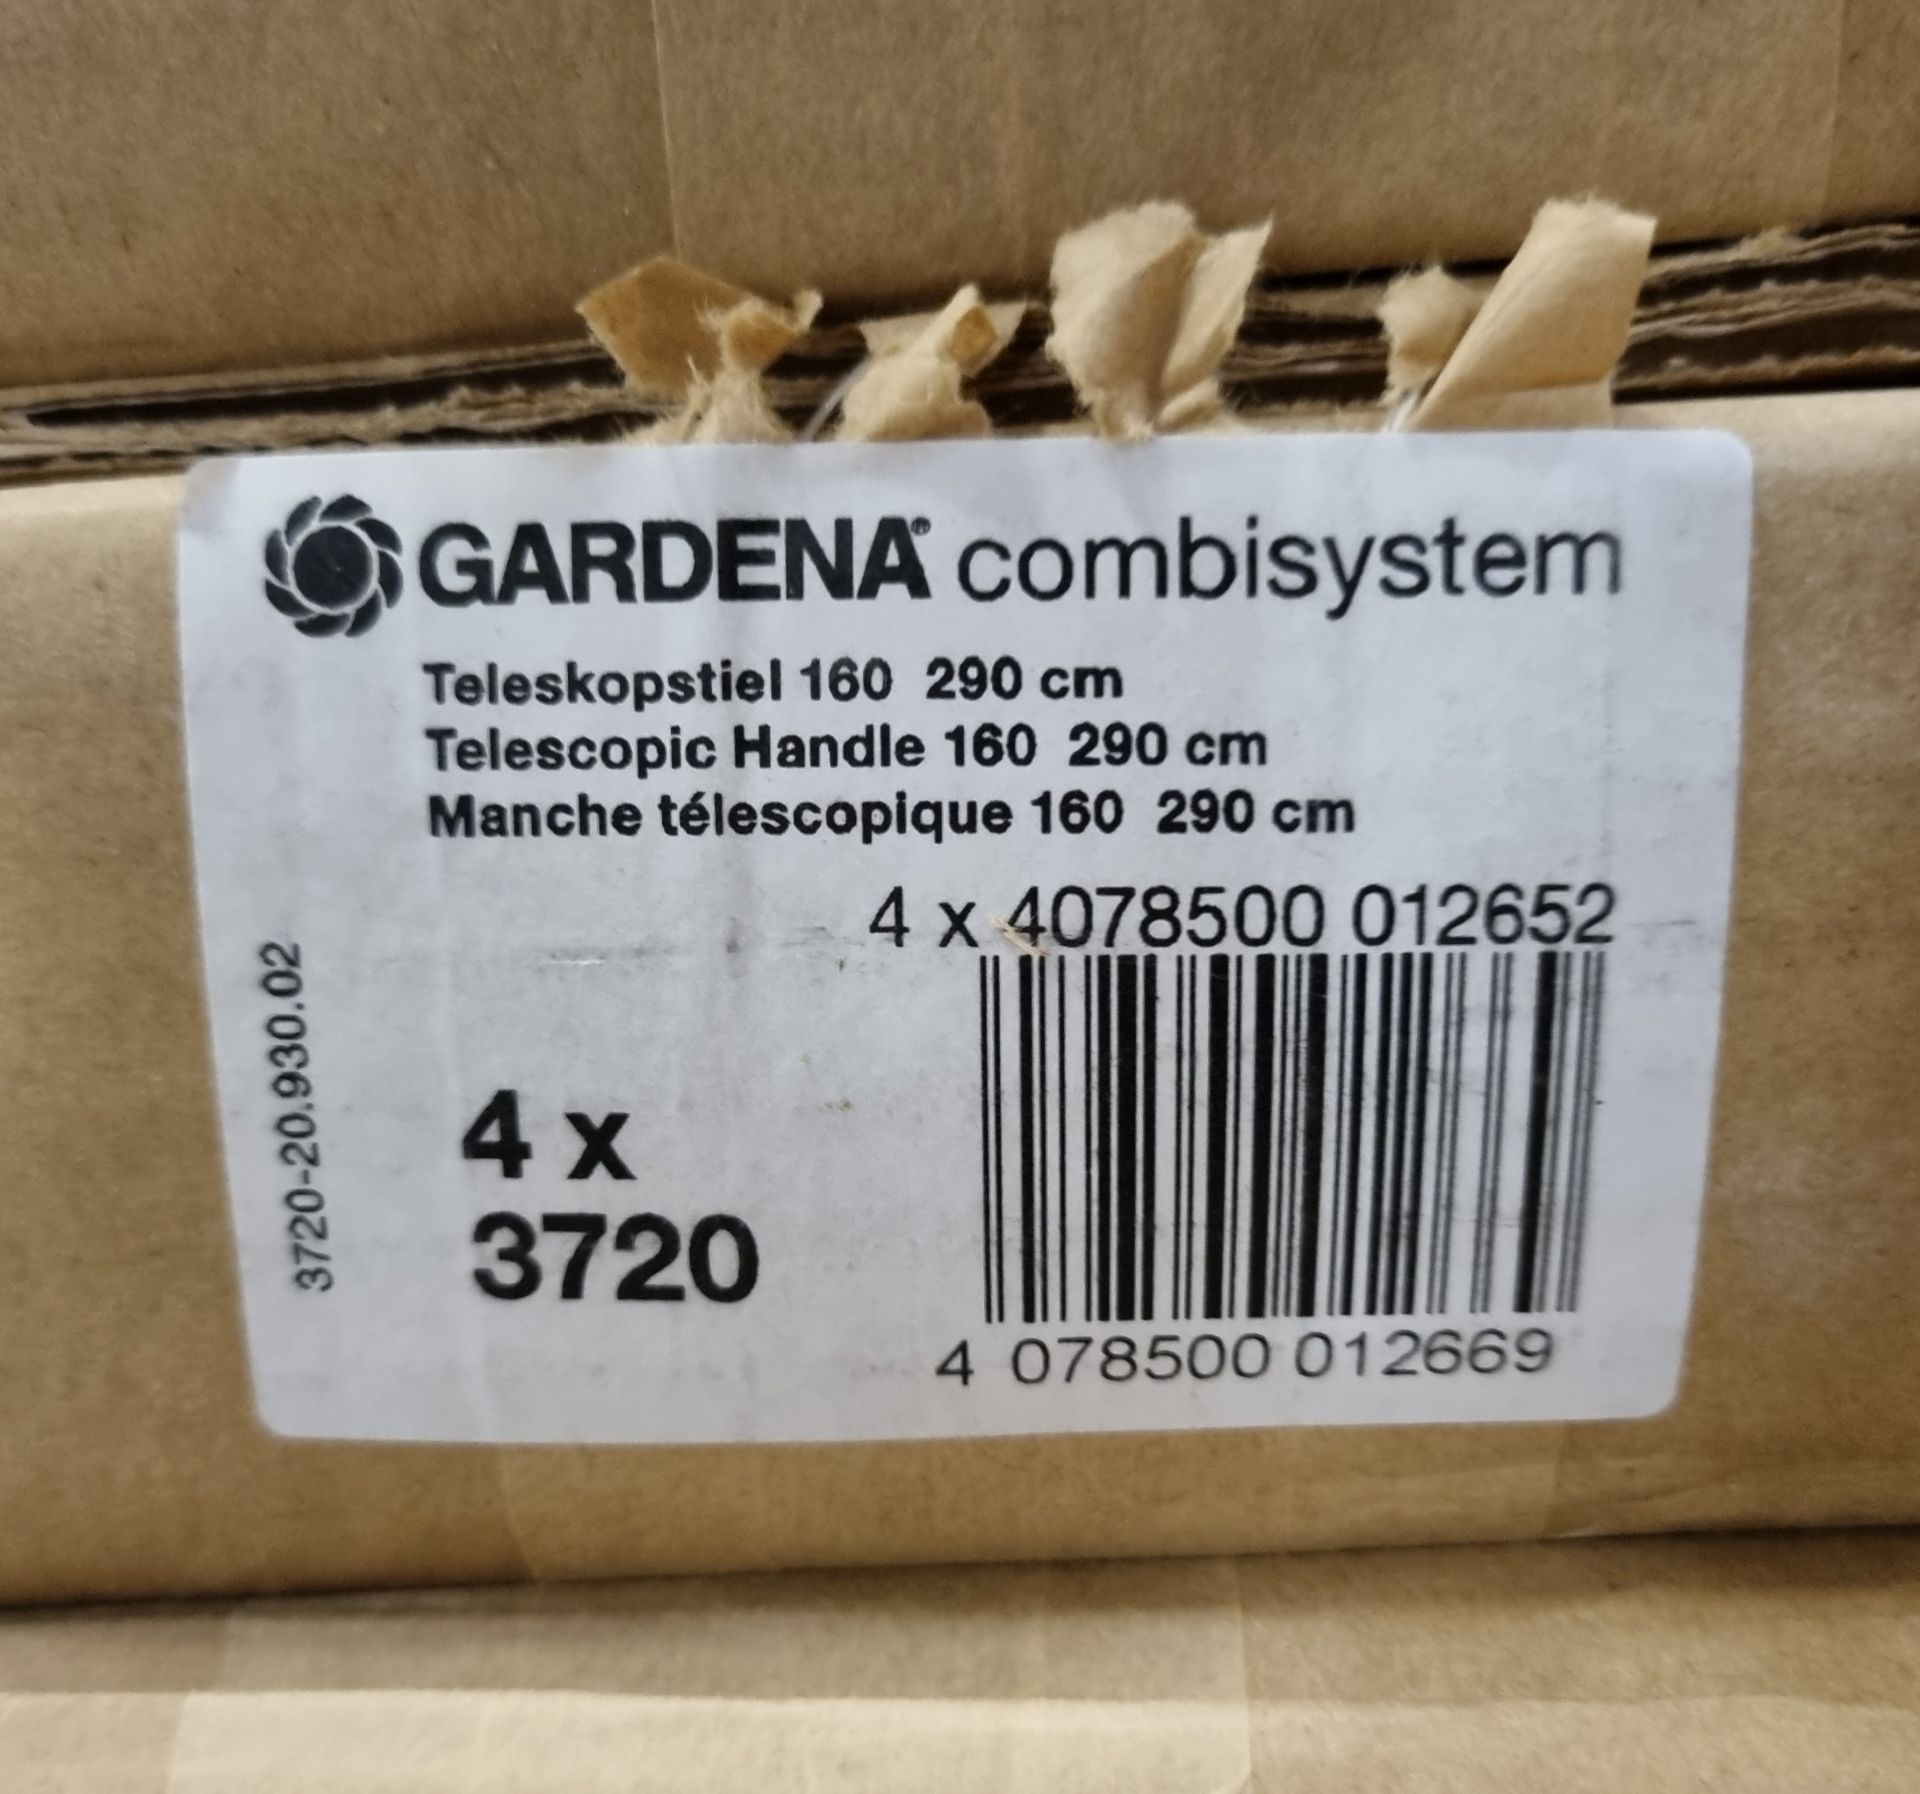 40x Gardena combisystem 210 - 390cm telescopic handles, 72x Gardena combisystem 160 - 290cm handles - Bild 6 aus 6